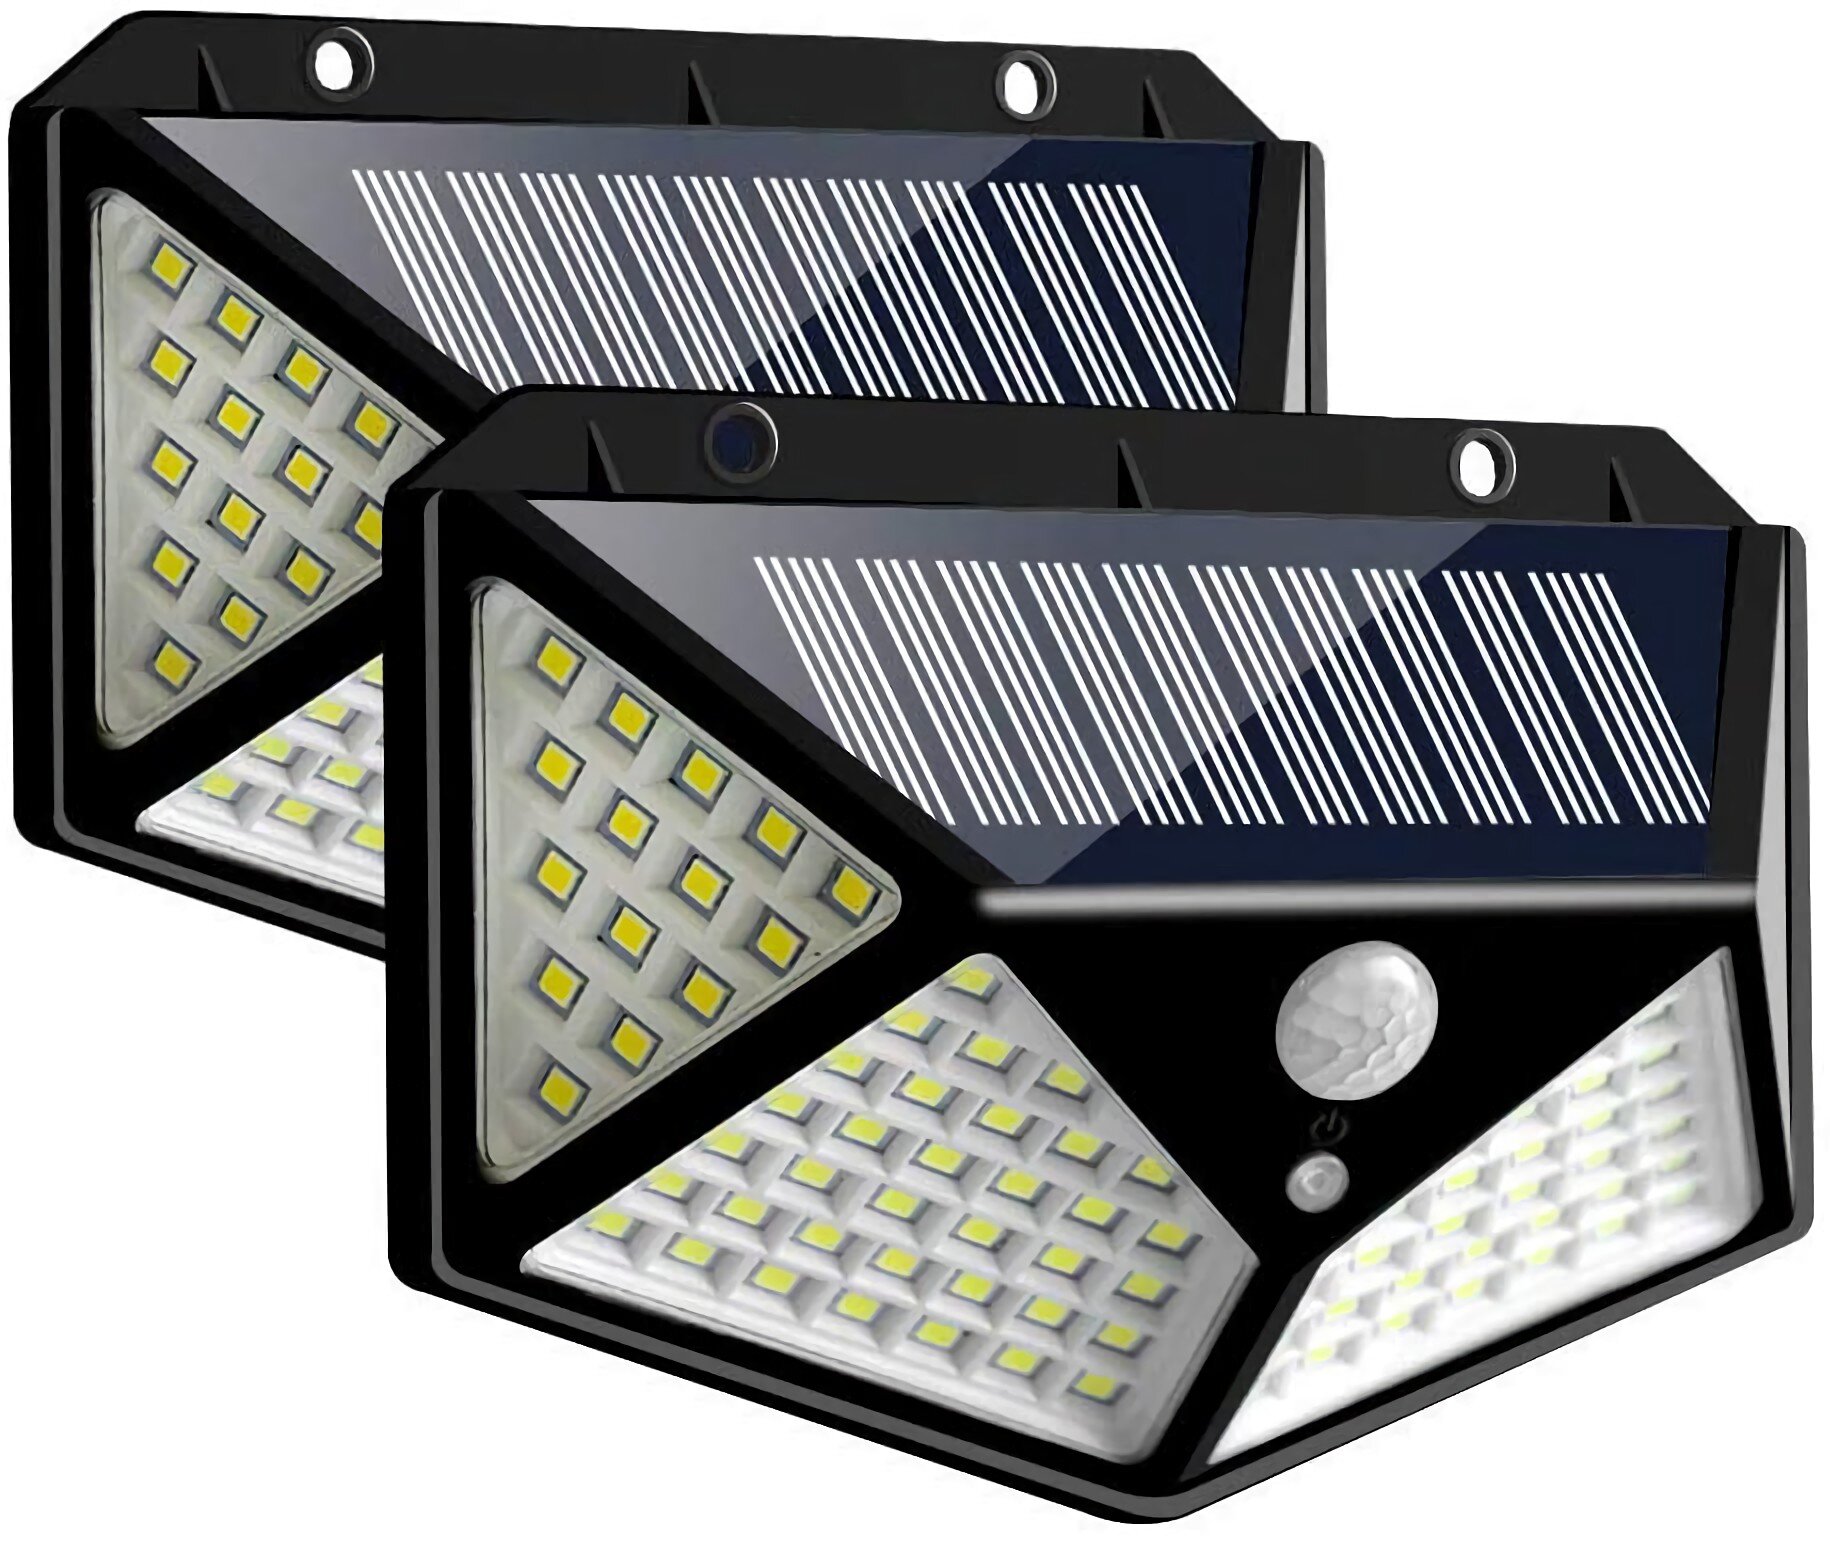 22 Black LED Solar Power Motion Sensor Light Dual Security Floodlight Outdoor US 